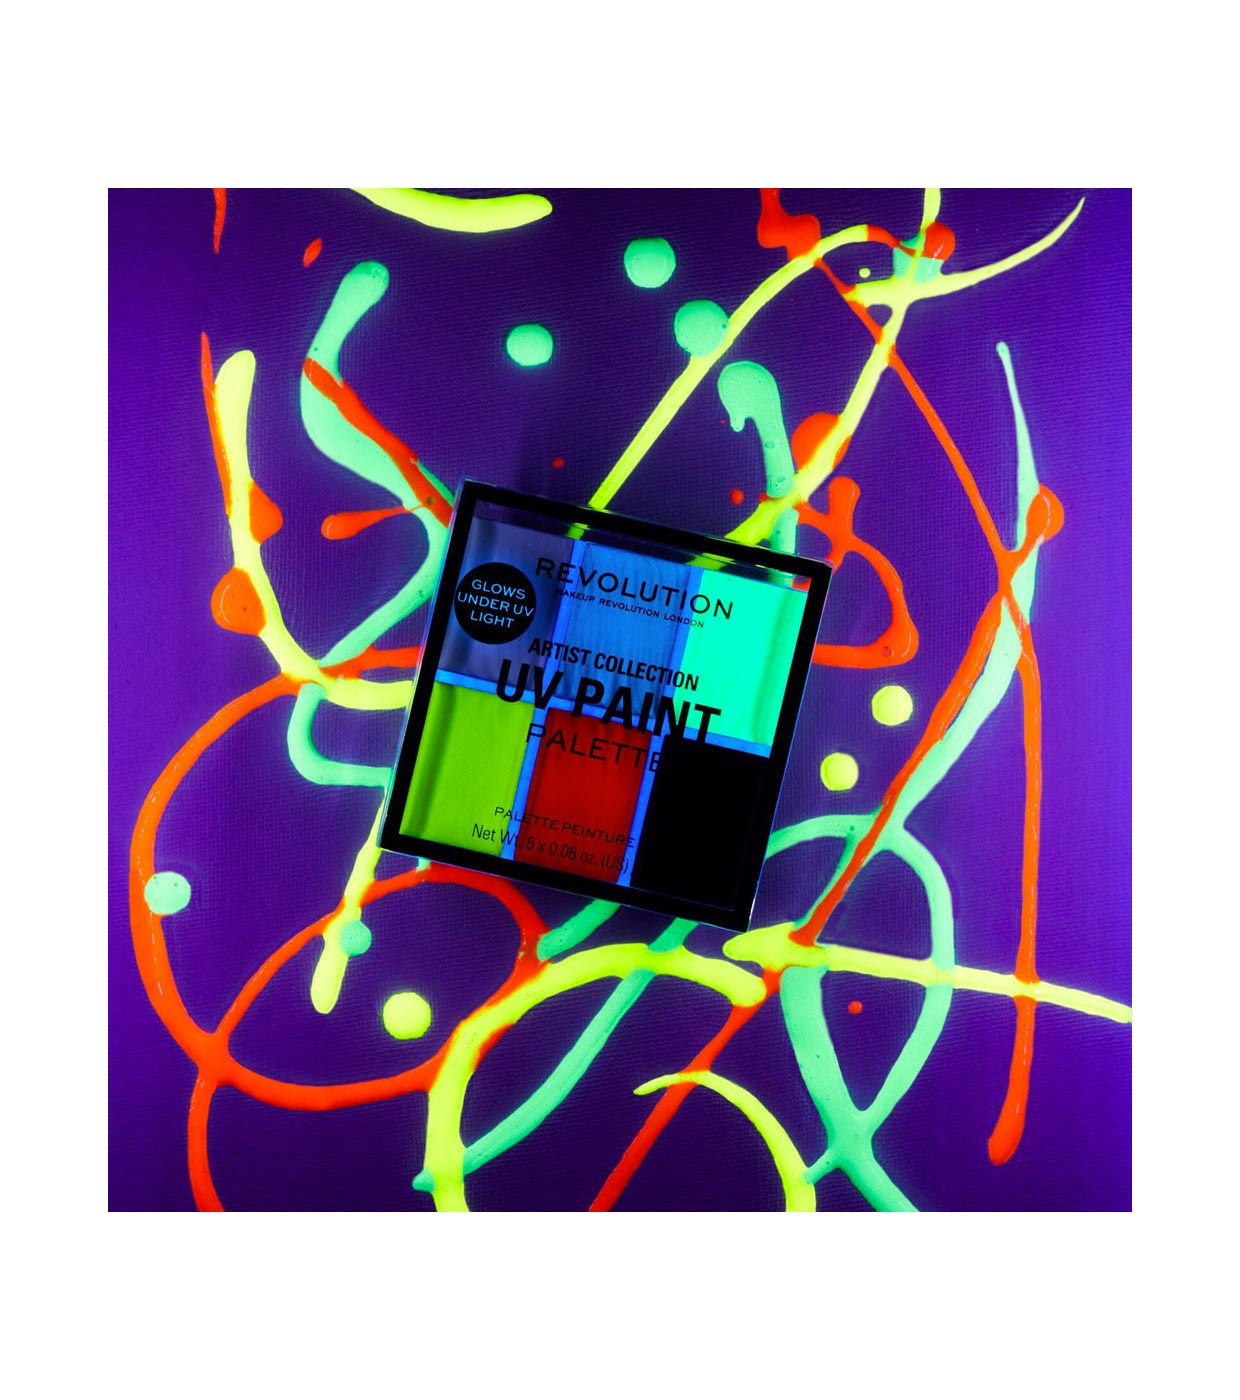 Revolution - *Artist Collection* - Paleta de cores Ultravioleta Aqua UV Paint